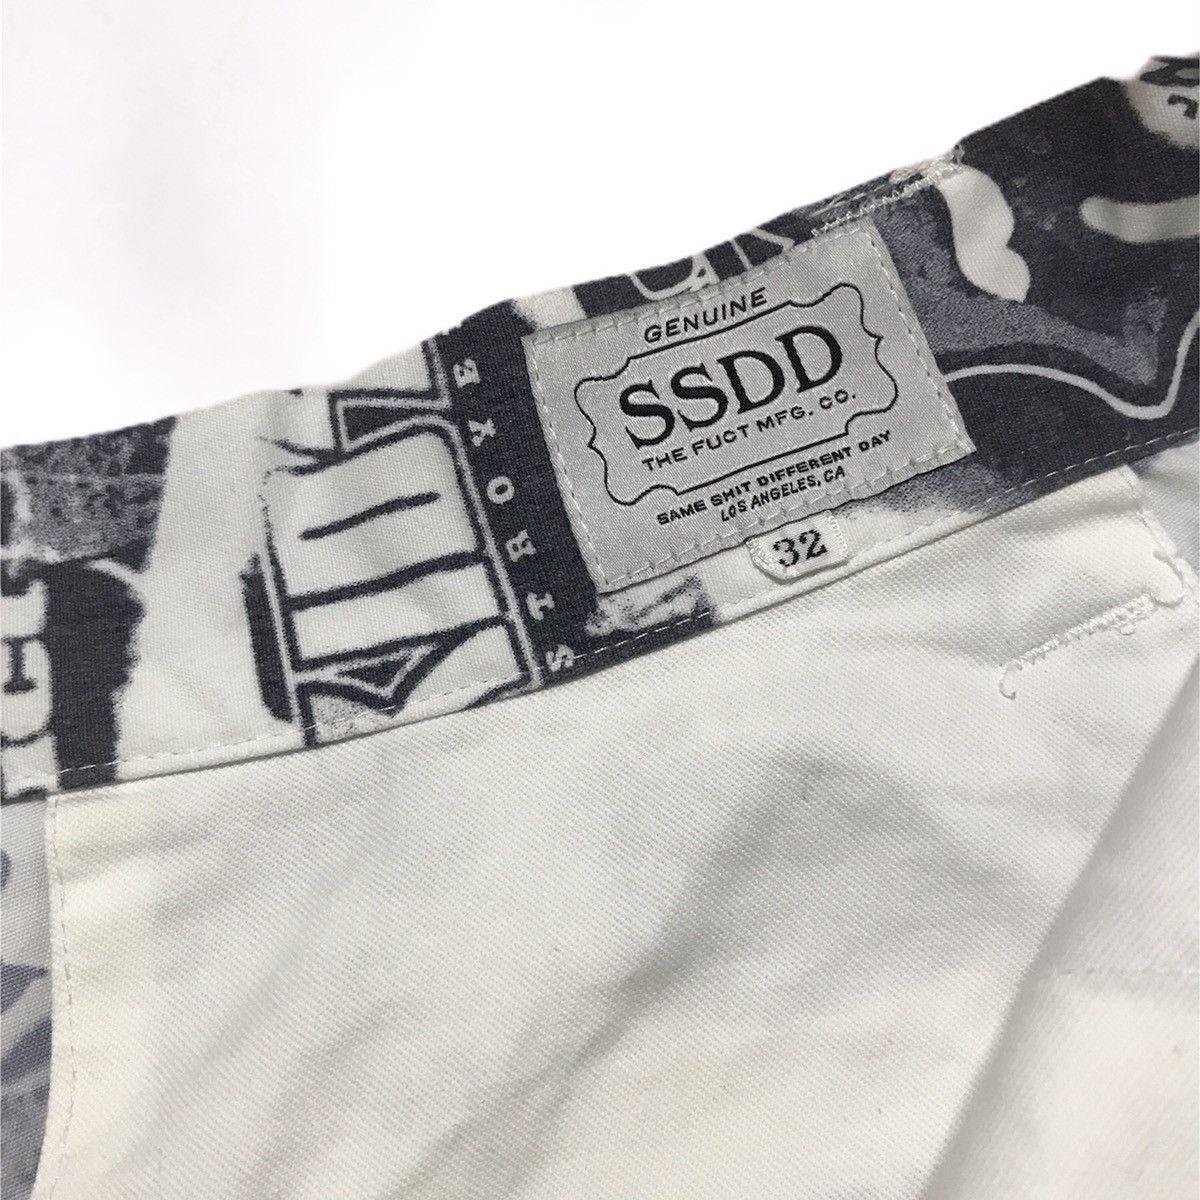 Fuct x SSDD Xerox Pattern short pants S/S 2016 - 3